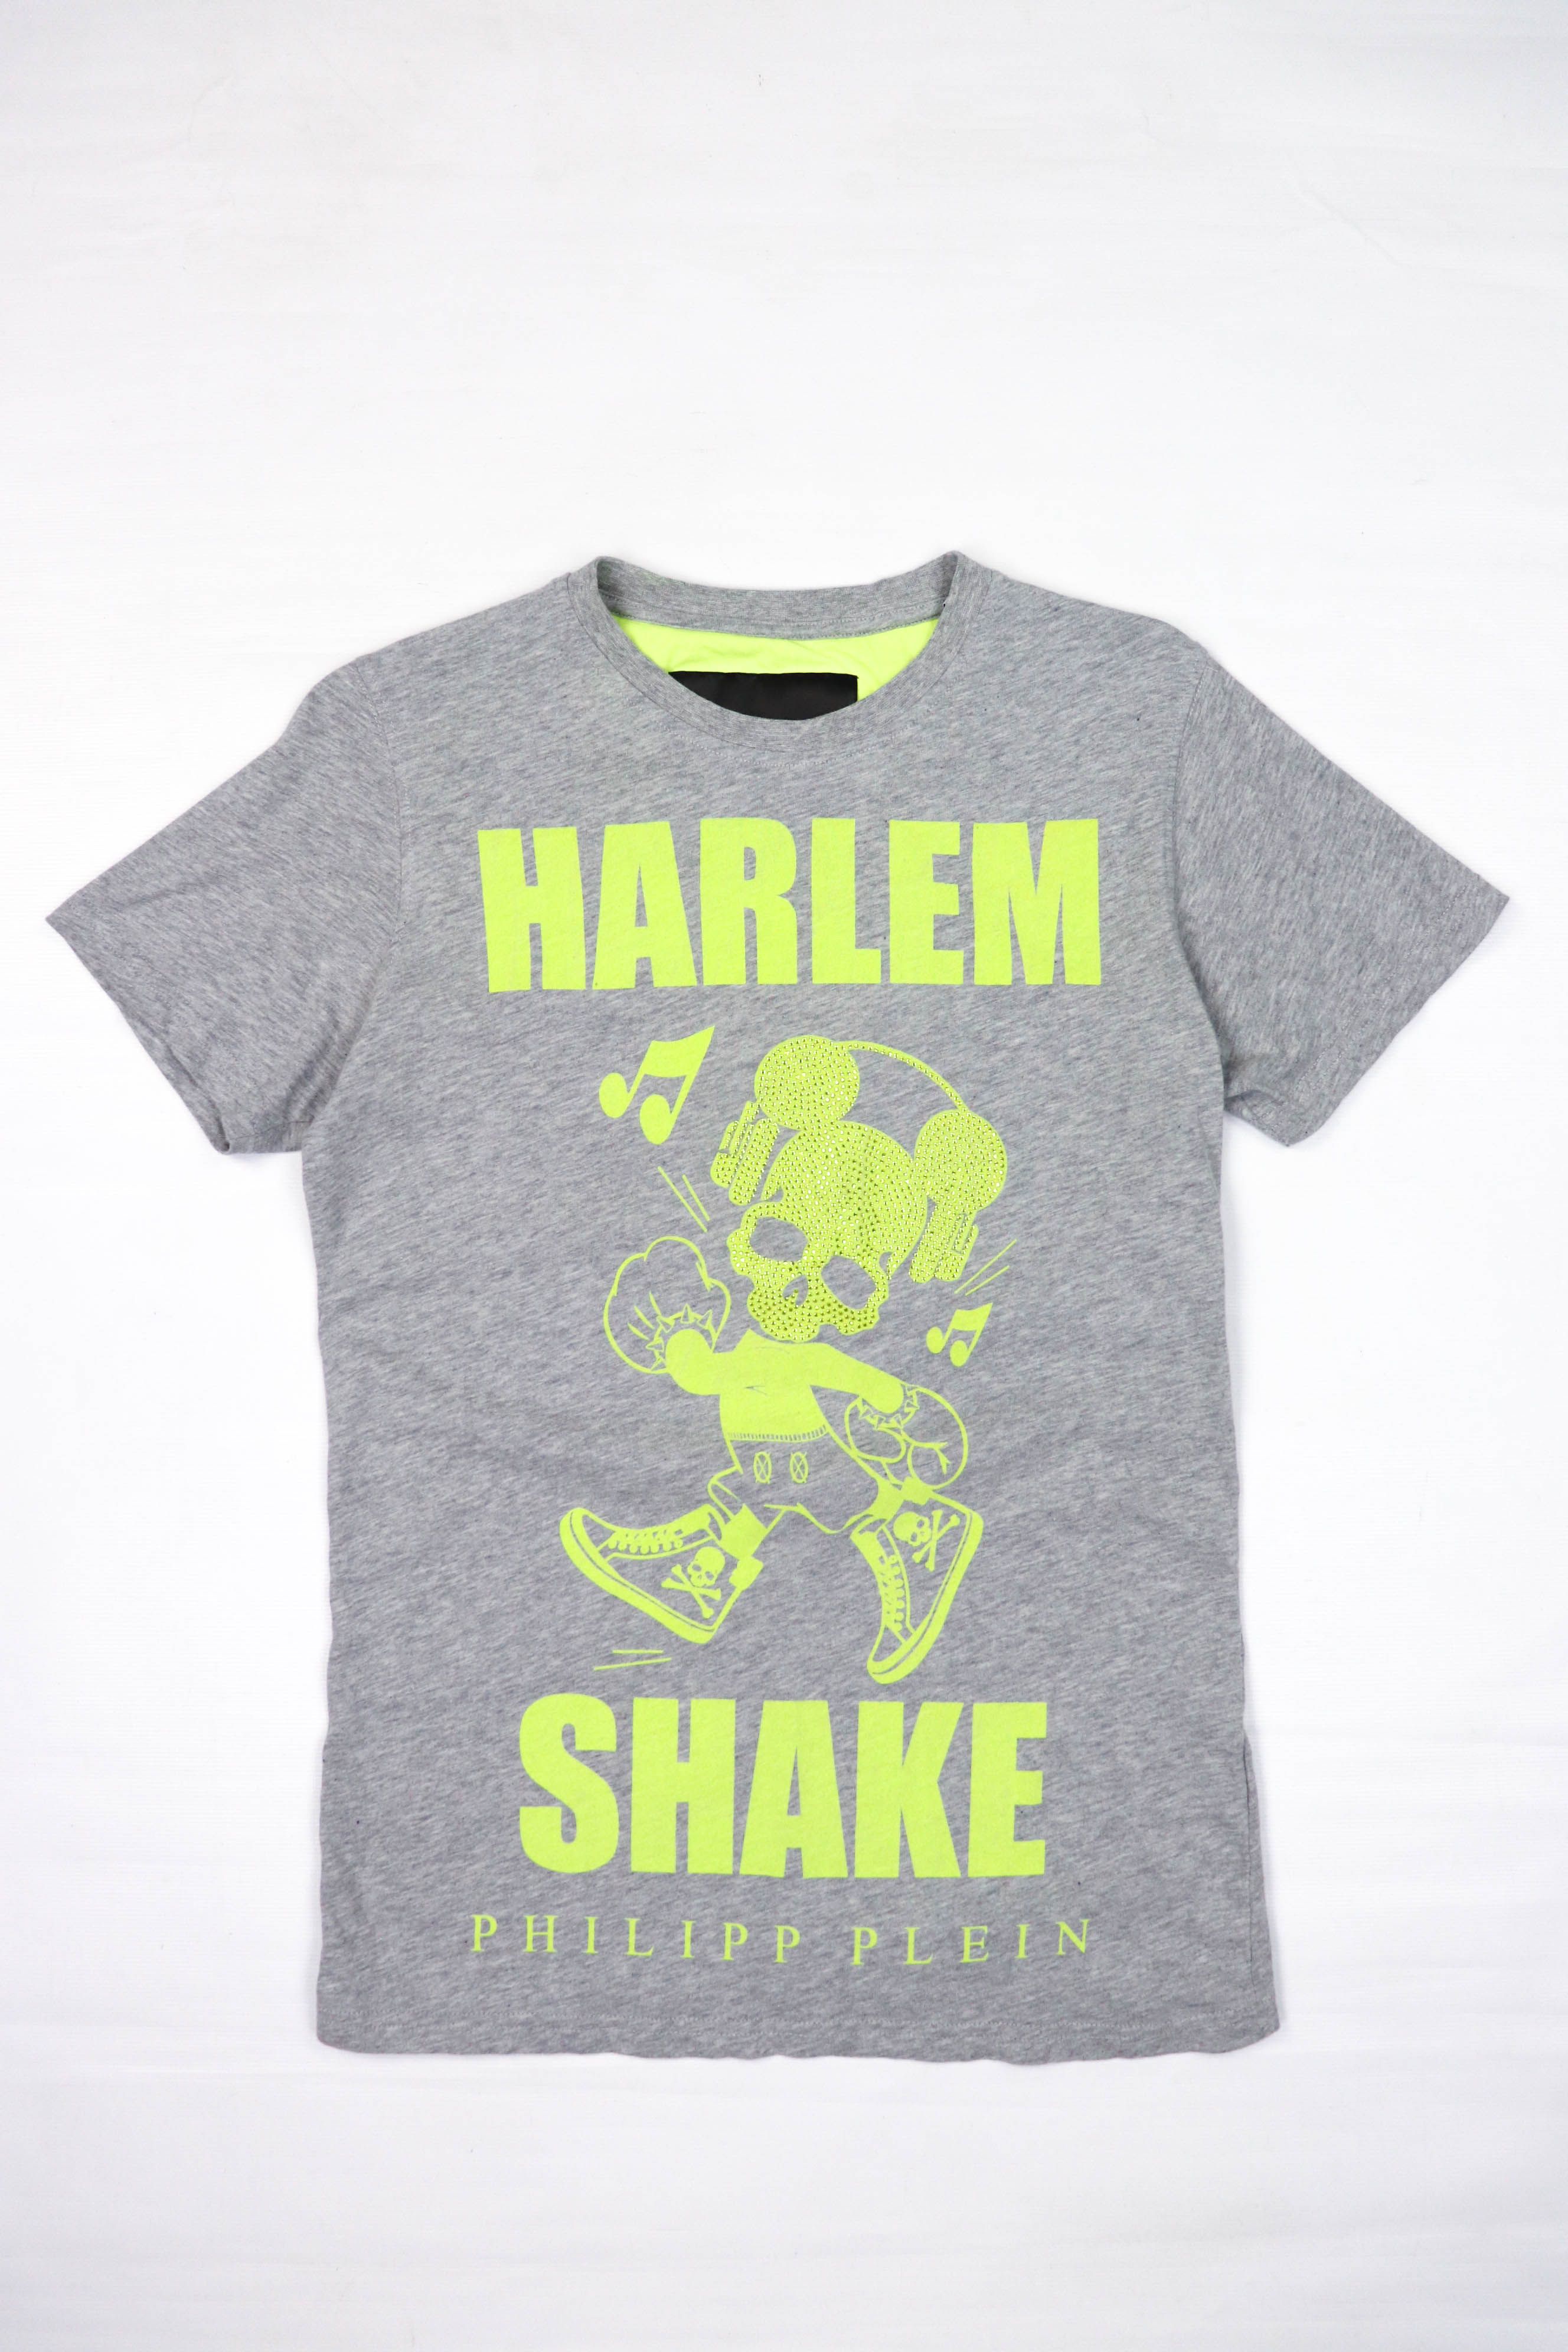 Philipp Plein Philipp Plein HOMME Harlem Shake Graphics Rhinestone T-shirt Size US S / EU 44-46 / 1 - 1 Preview